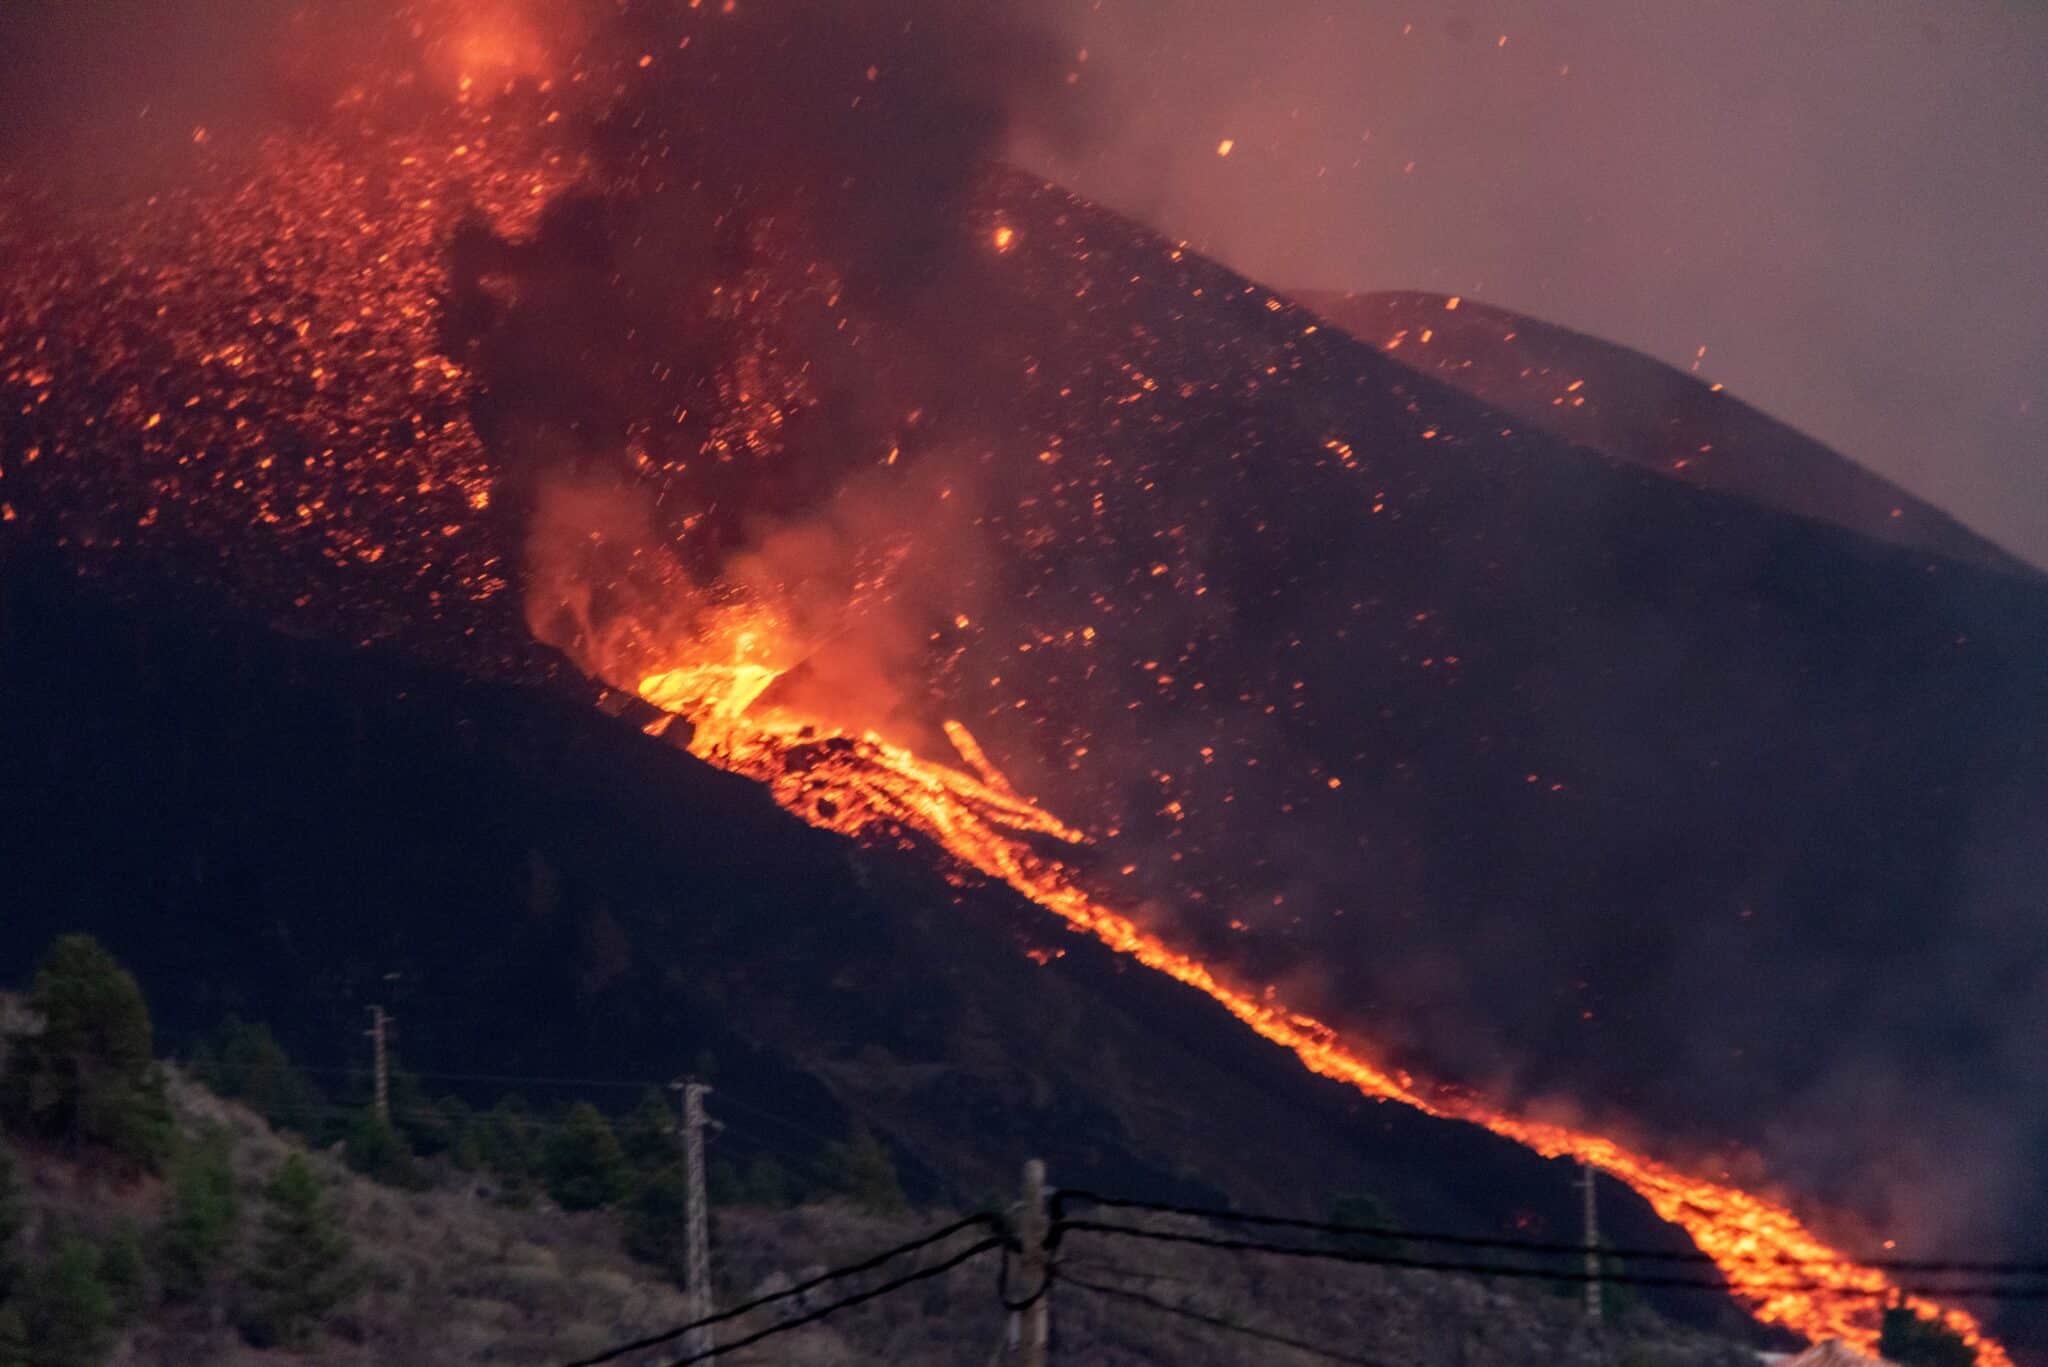 Grillo, jefe de Emergencias: "Con este volcán lo de hoy no vale mañana"